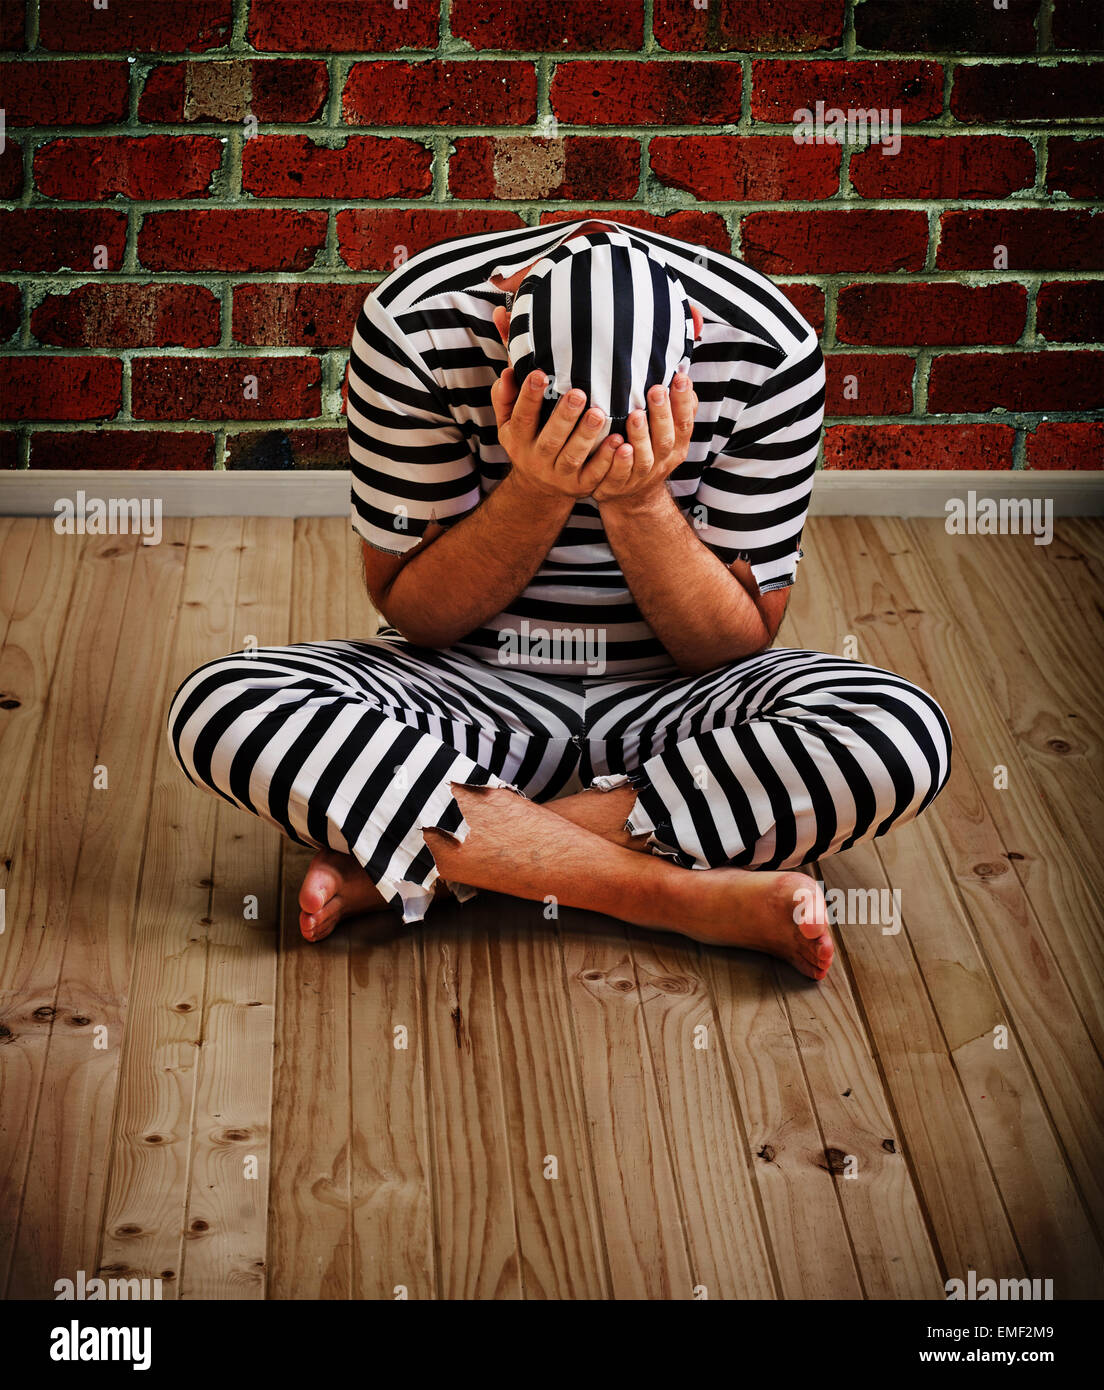 portrait of a repentant man prisoner in prison uniform Stock Photo